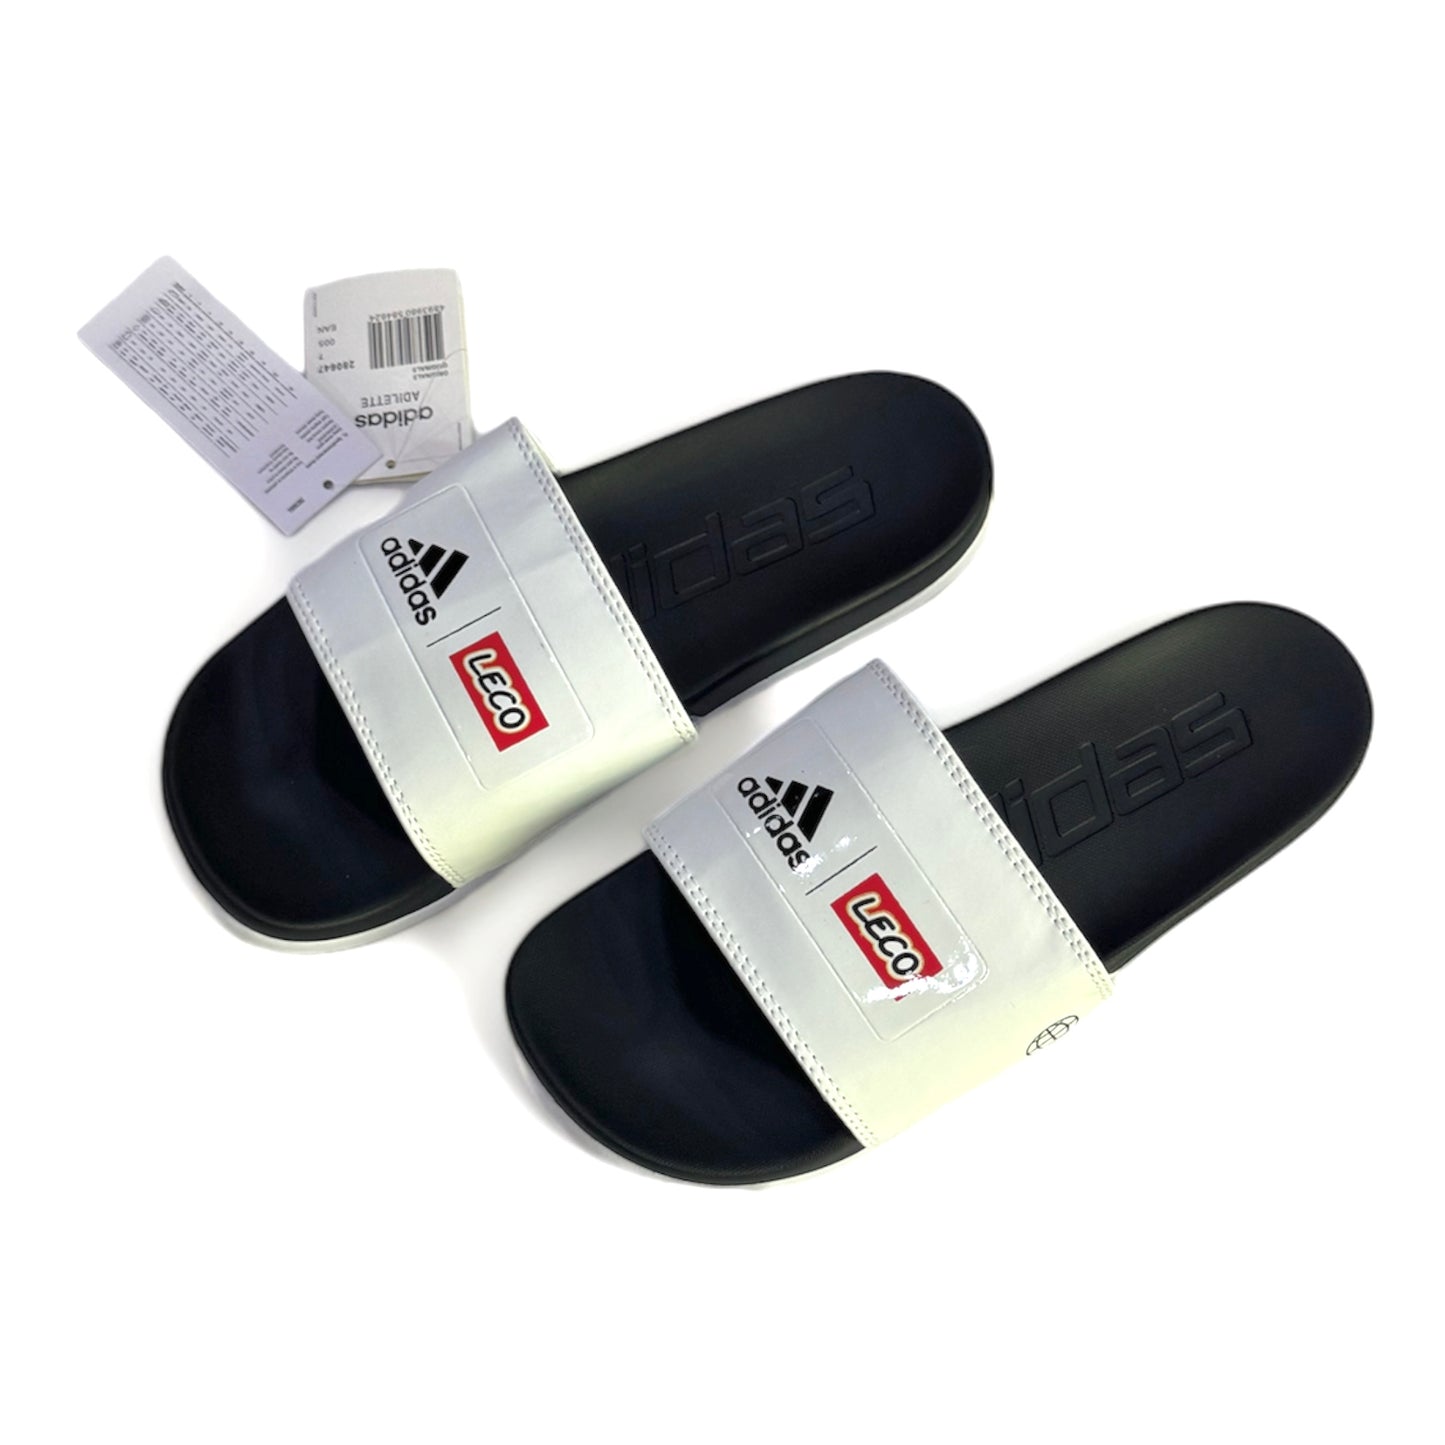 A-D-I-D-A-S Imported Premium Soft White & Black Slides